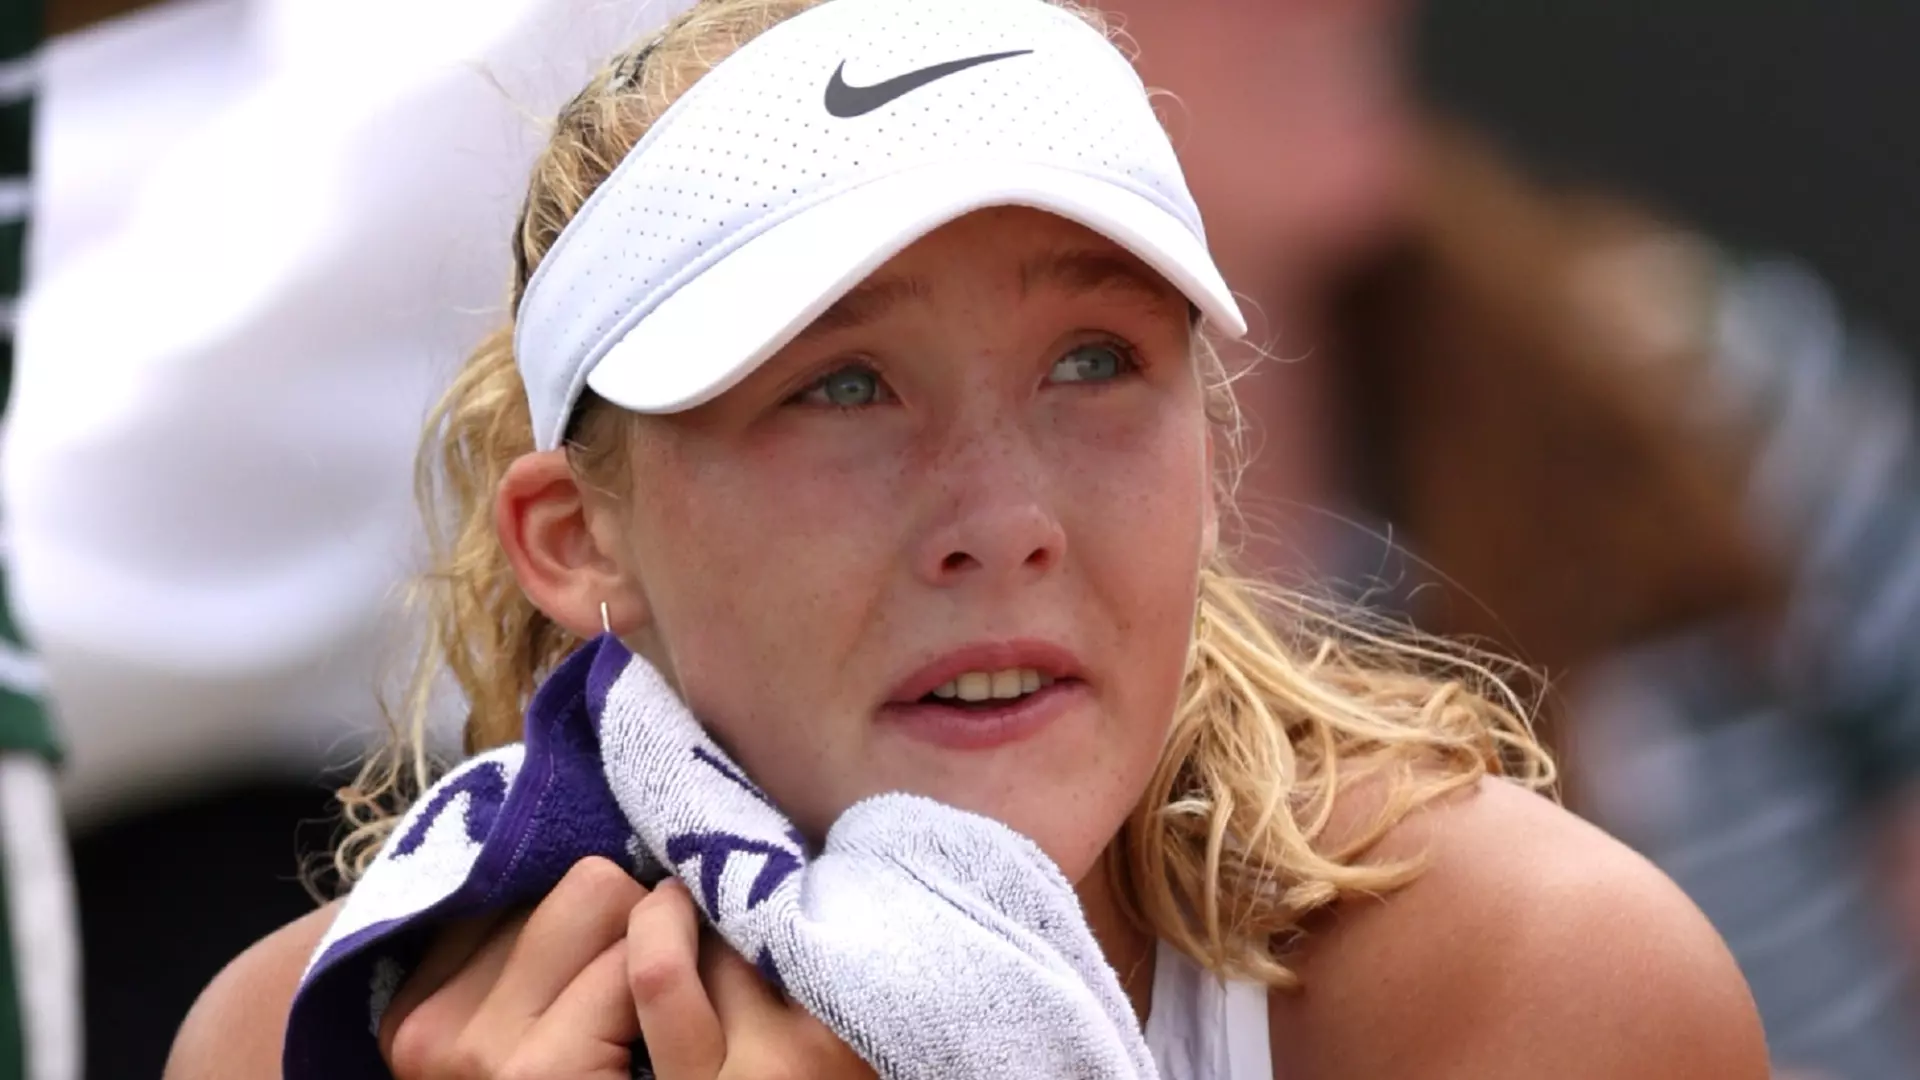 Lacrime per Mirra Andreeva: finisce la favola della 16enne a Wimbledon